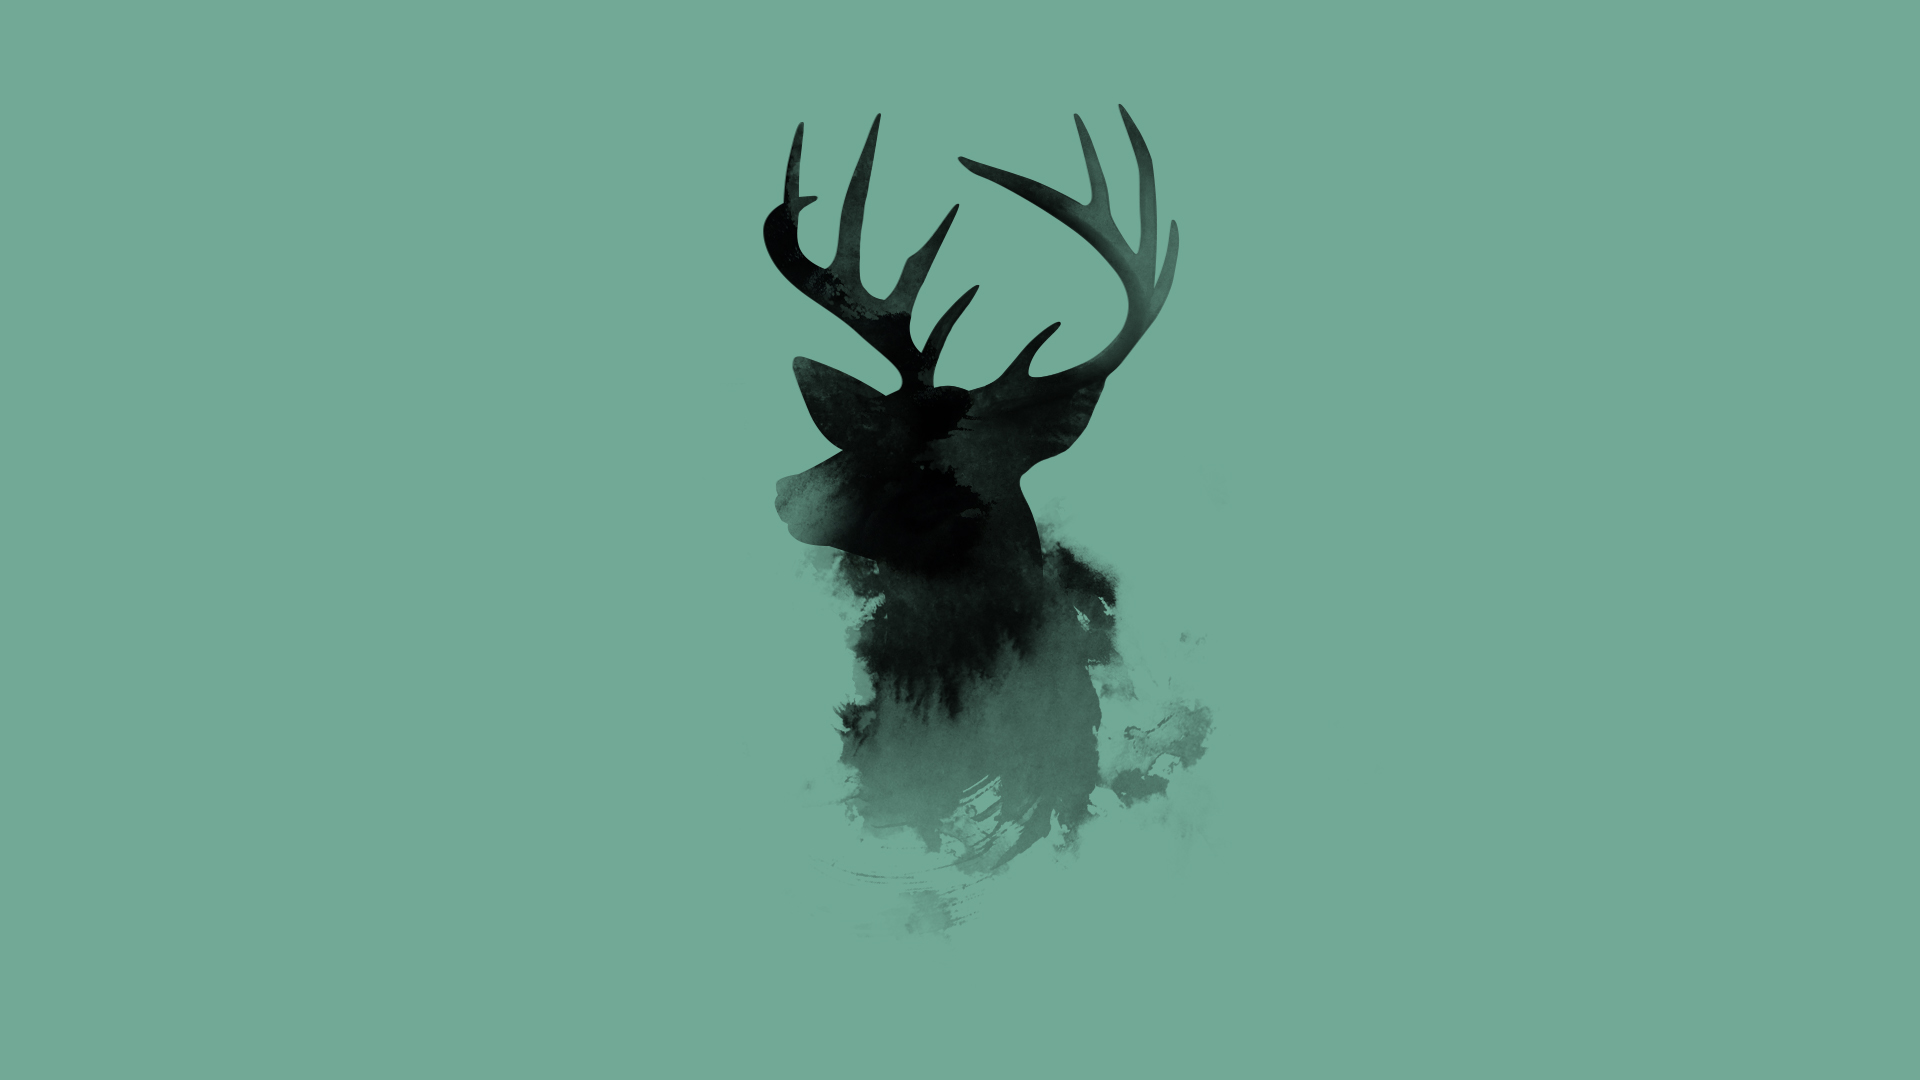 General 1920x1080 deer simple background green background painting minimalism